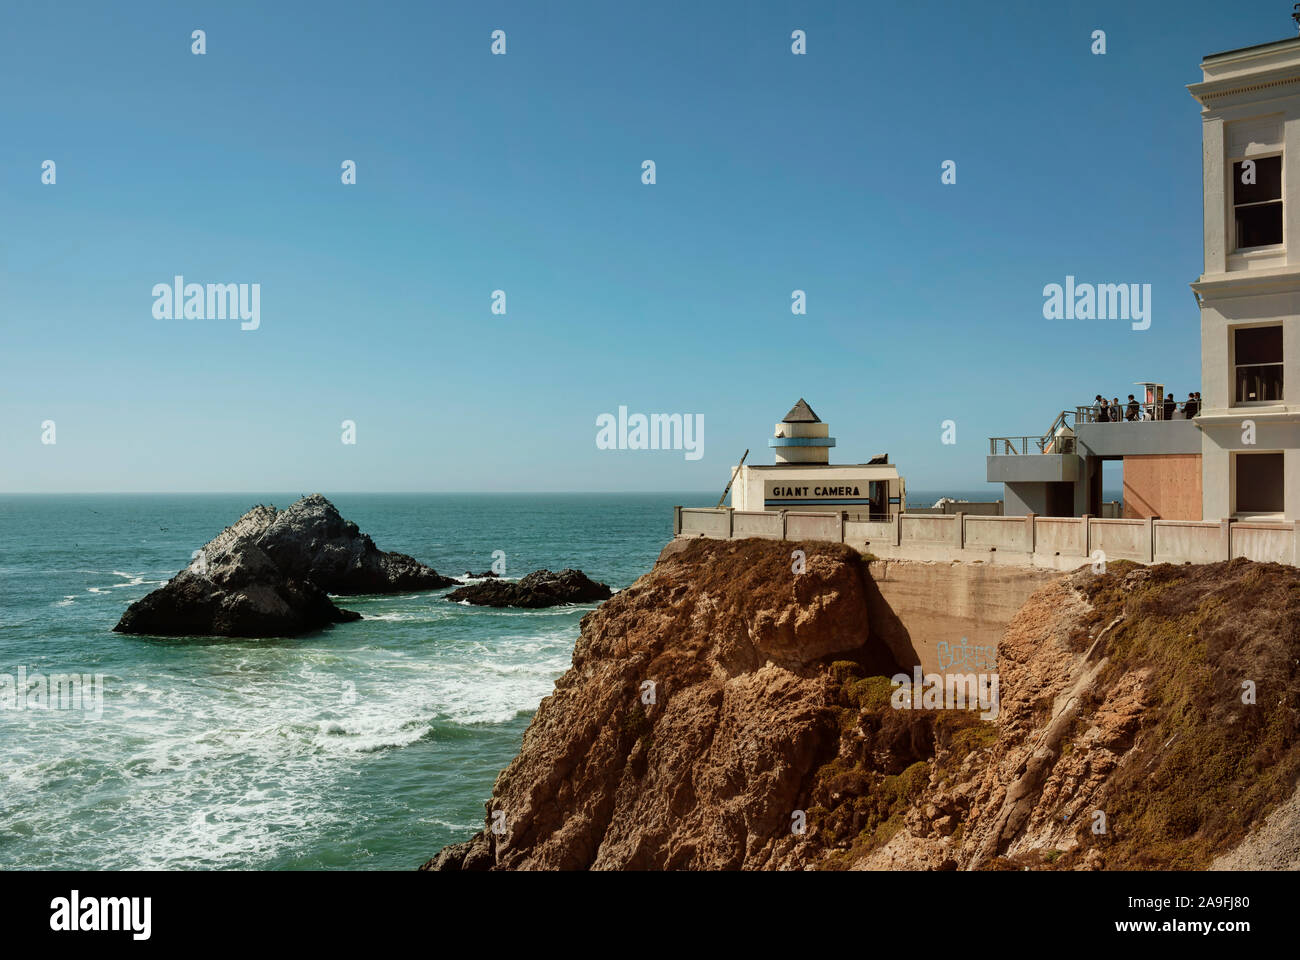 Paysage côtier de la Seal Rock, y compris l'installation de la caméra / Camera Obscura avec vue partielle de Cliff House. San Francisco, CA, USA Banque D'Images